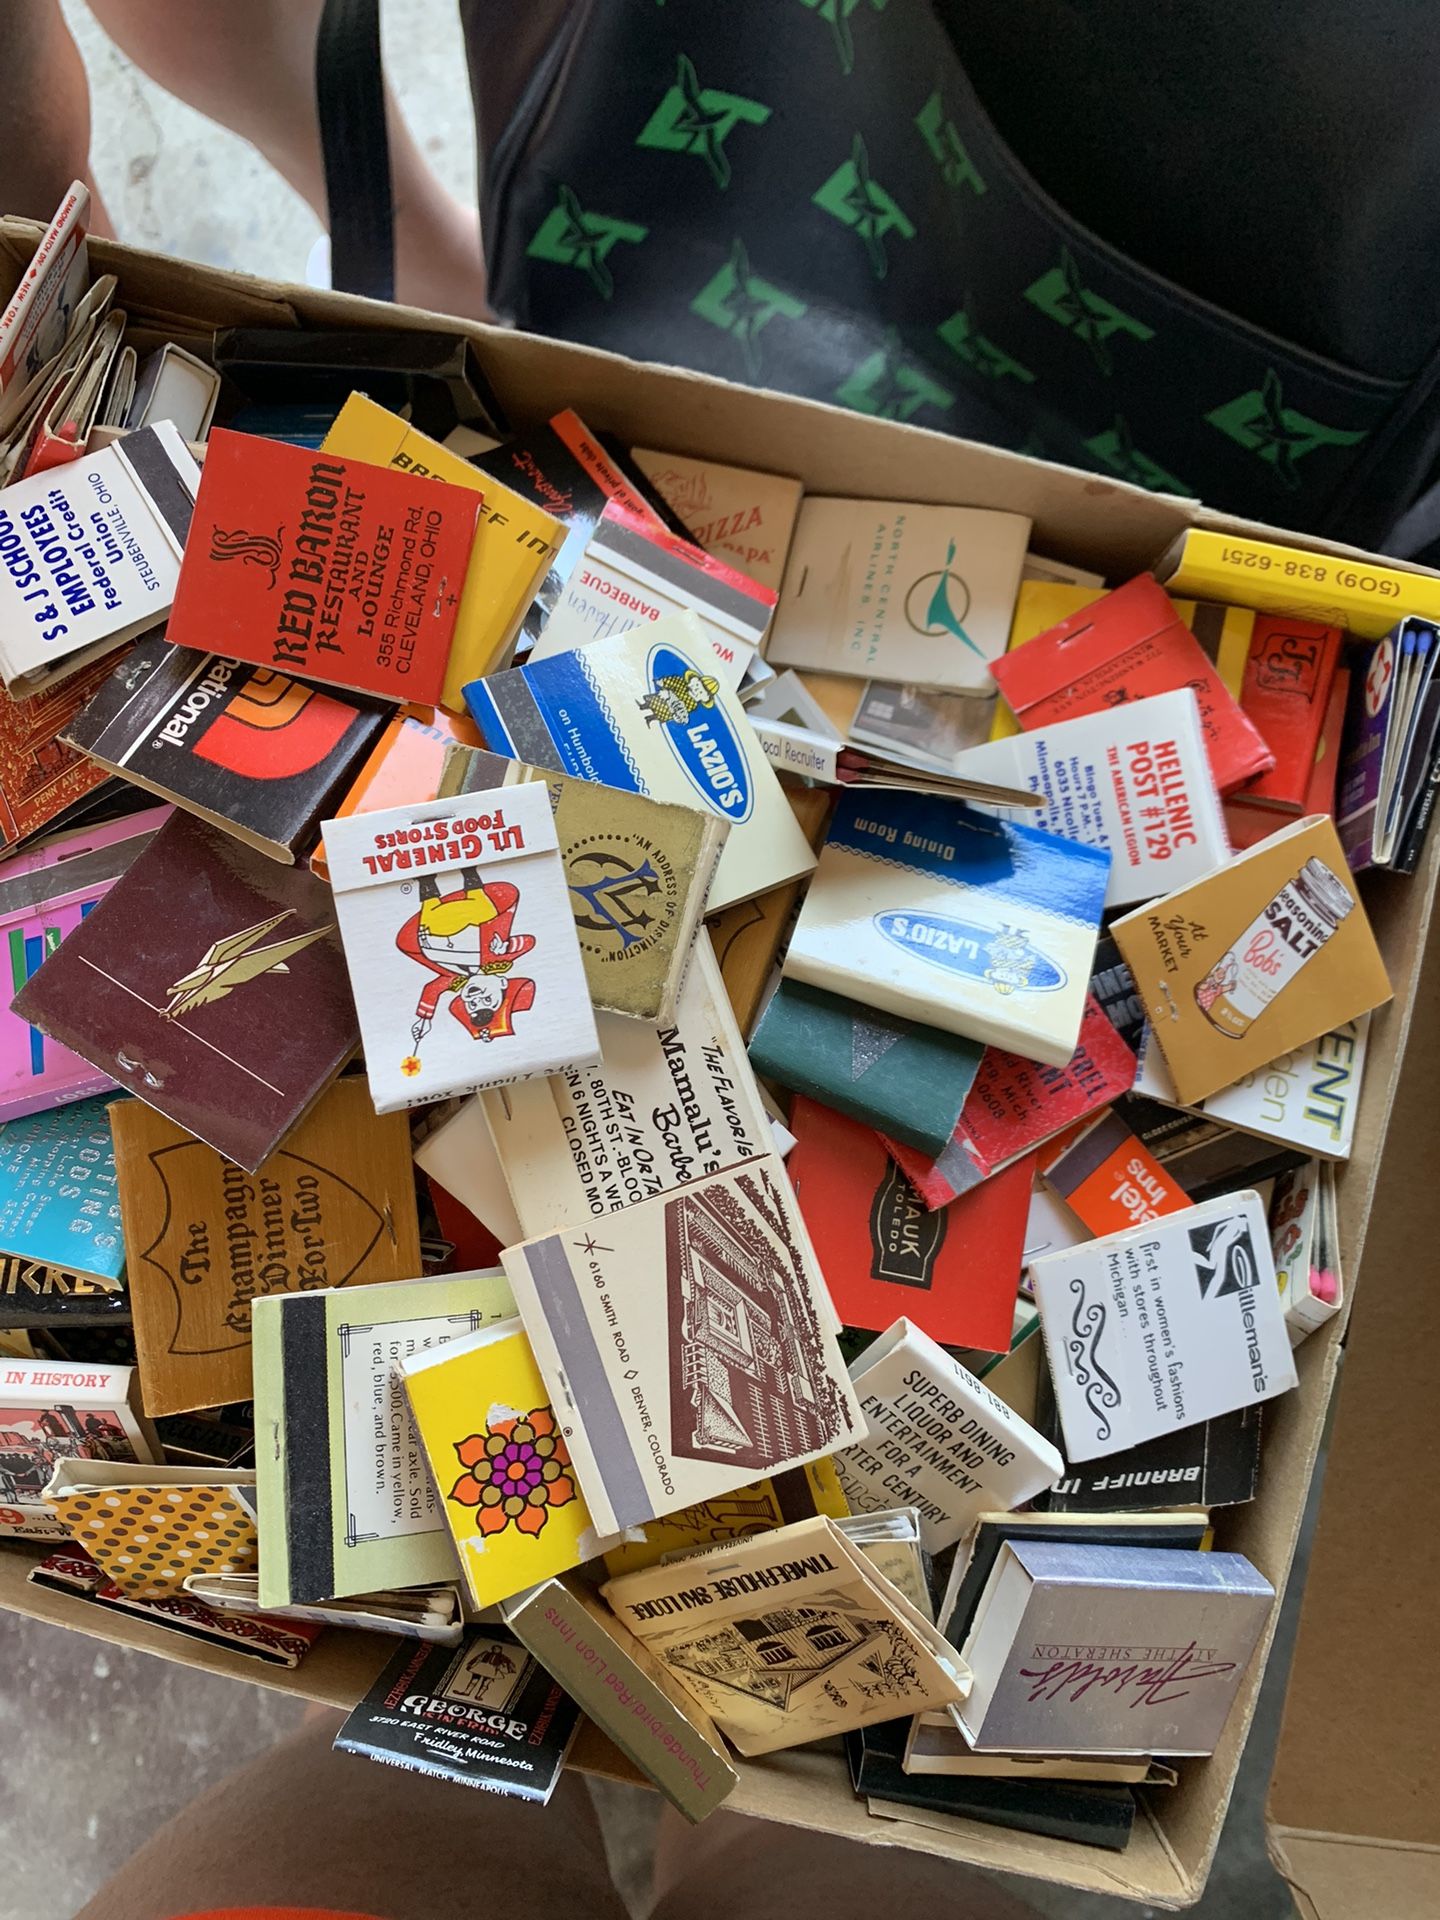 Box of vintage Matchbooks